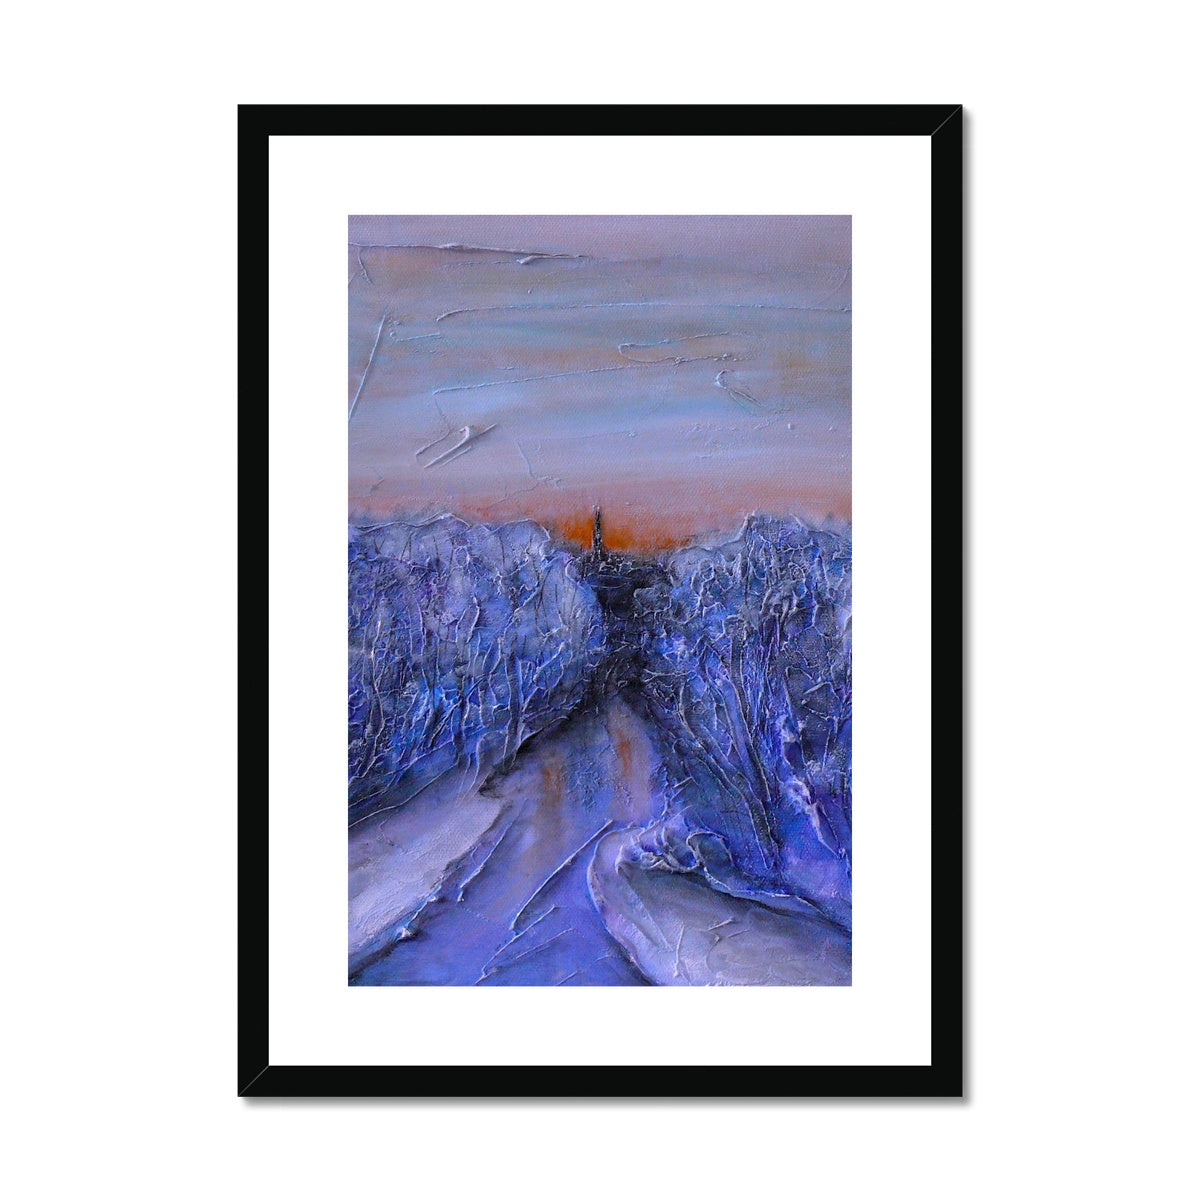 A Frozen River Kelvin Painting | Framed & Mounted Prints From Scotland-Framed & Mounted Prints-Edinburgh & Glasgow Art Gallery-A2 Portrait-Black Frame-Paintings, Prints, Homeware, Art Gifts From Scotland By Scottish Artist Kevin Hunter